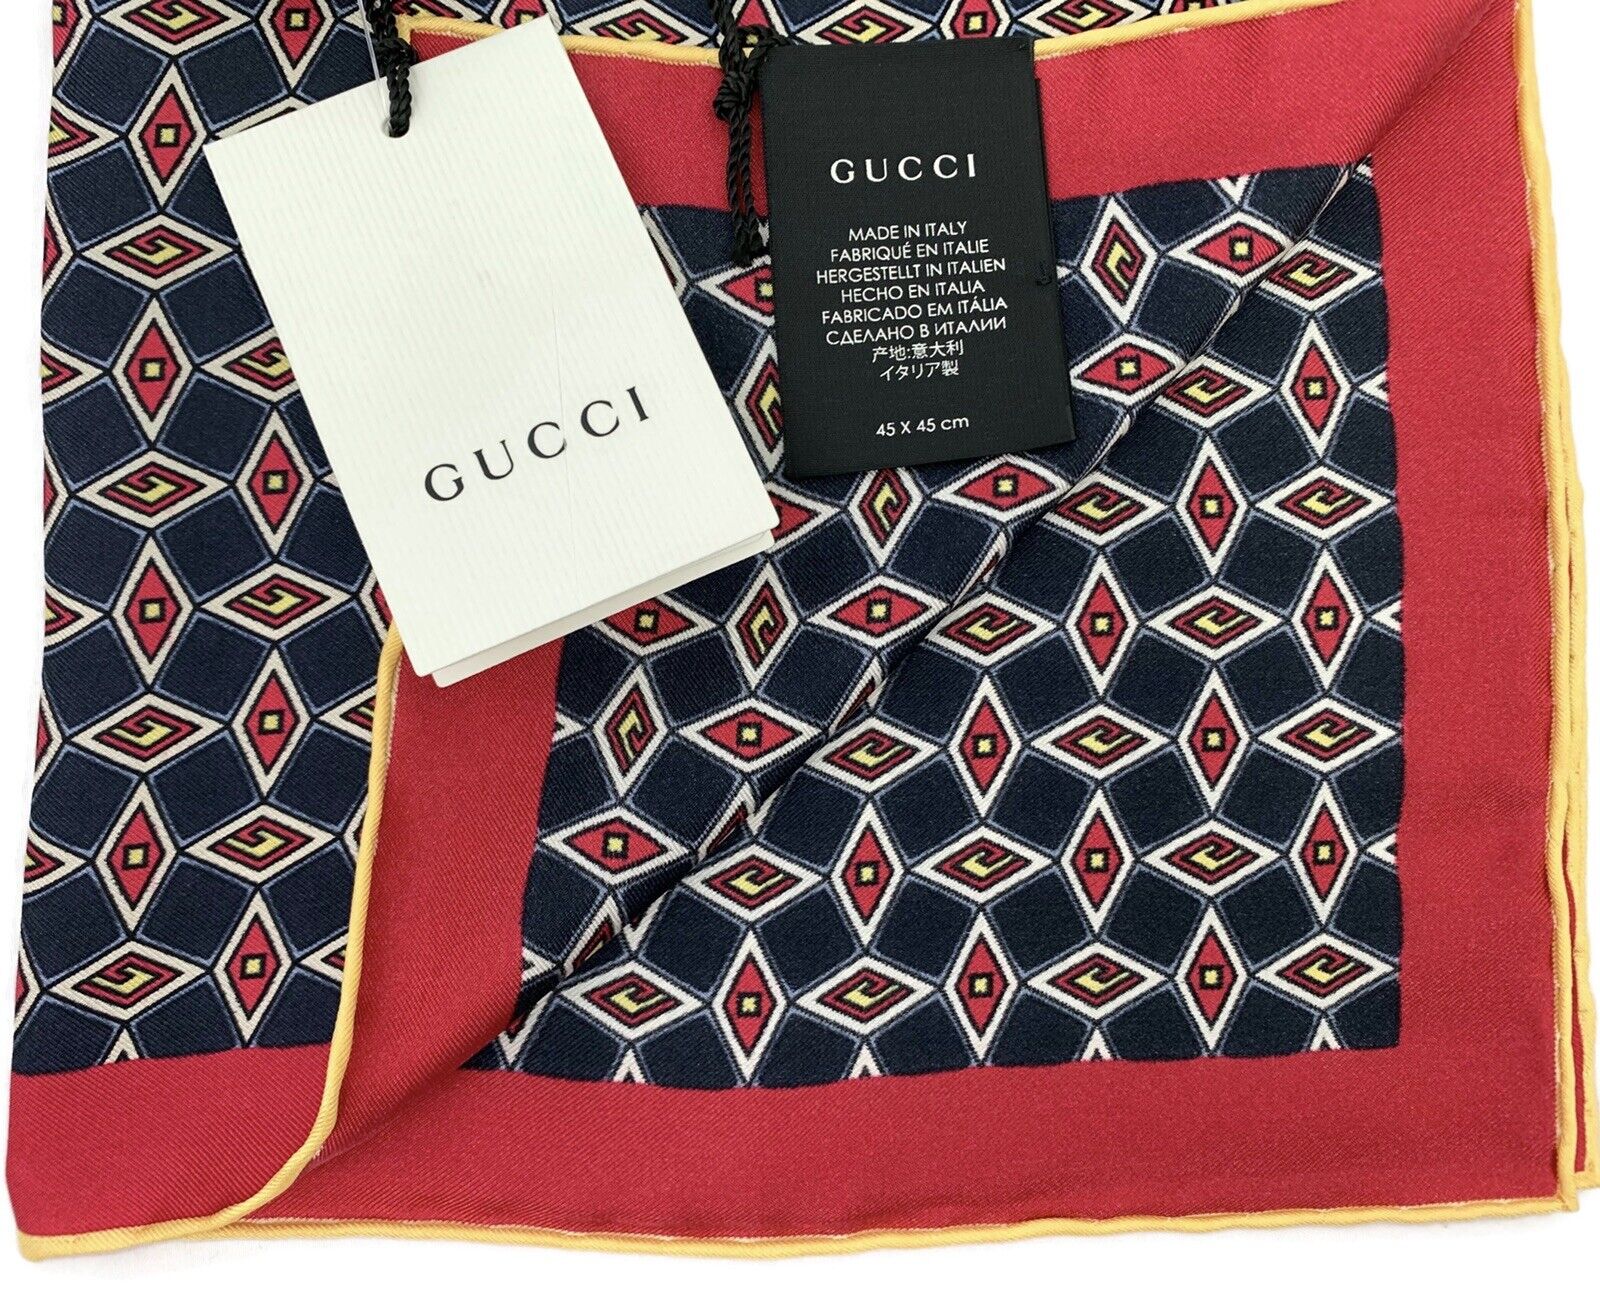 Gucci Interlocking G silk pocket square - 7422004G0054100